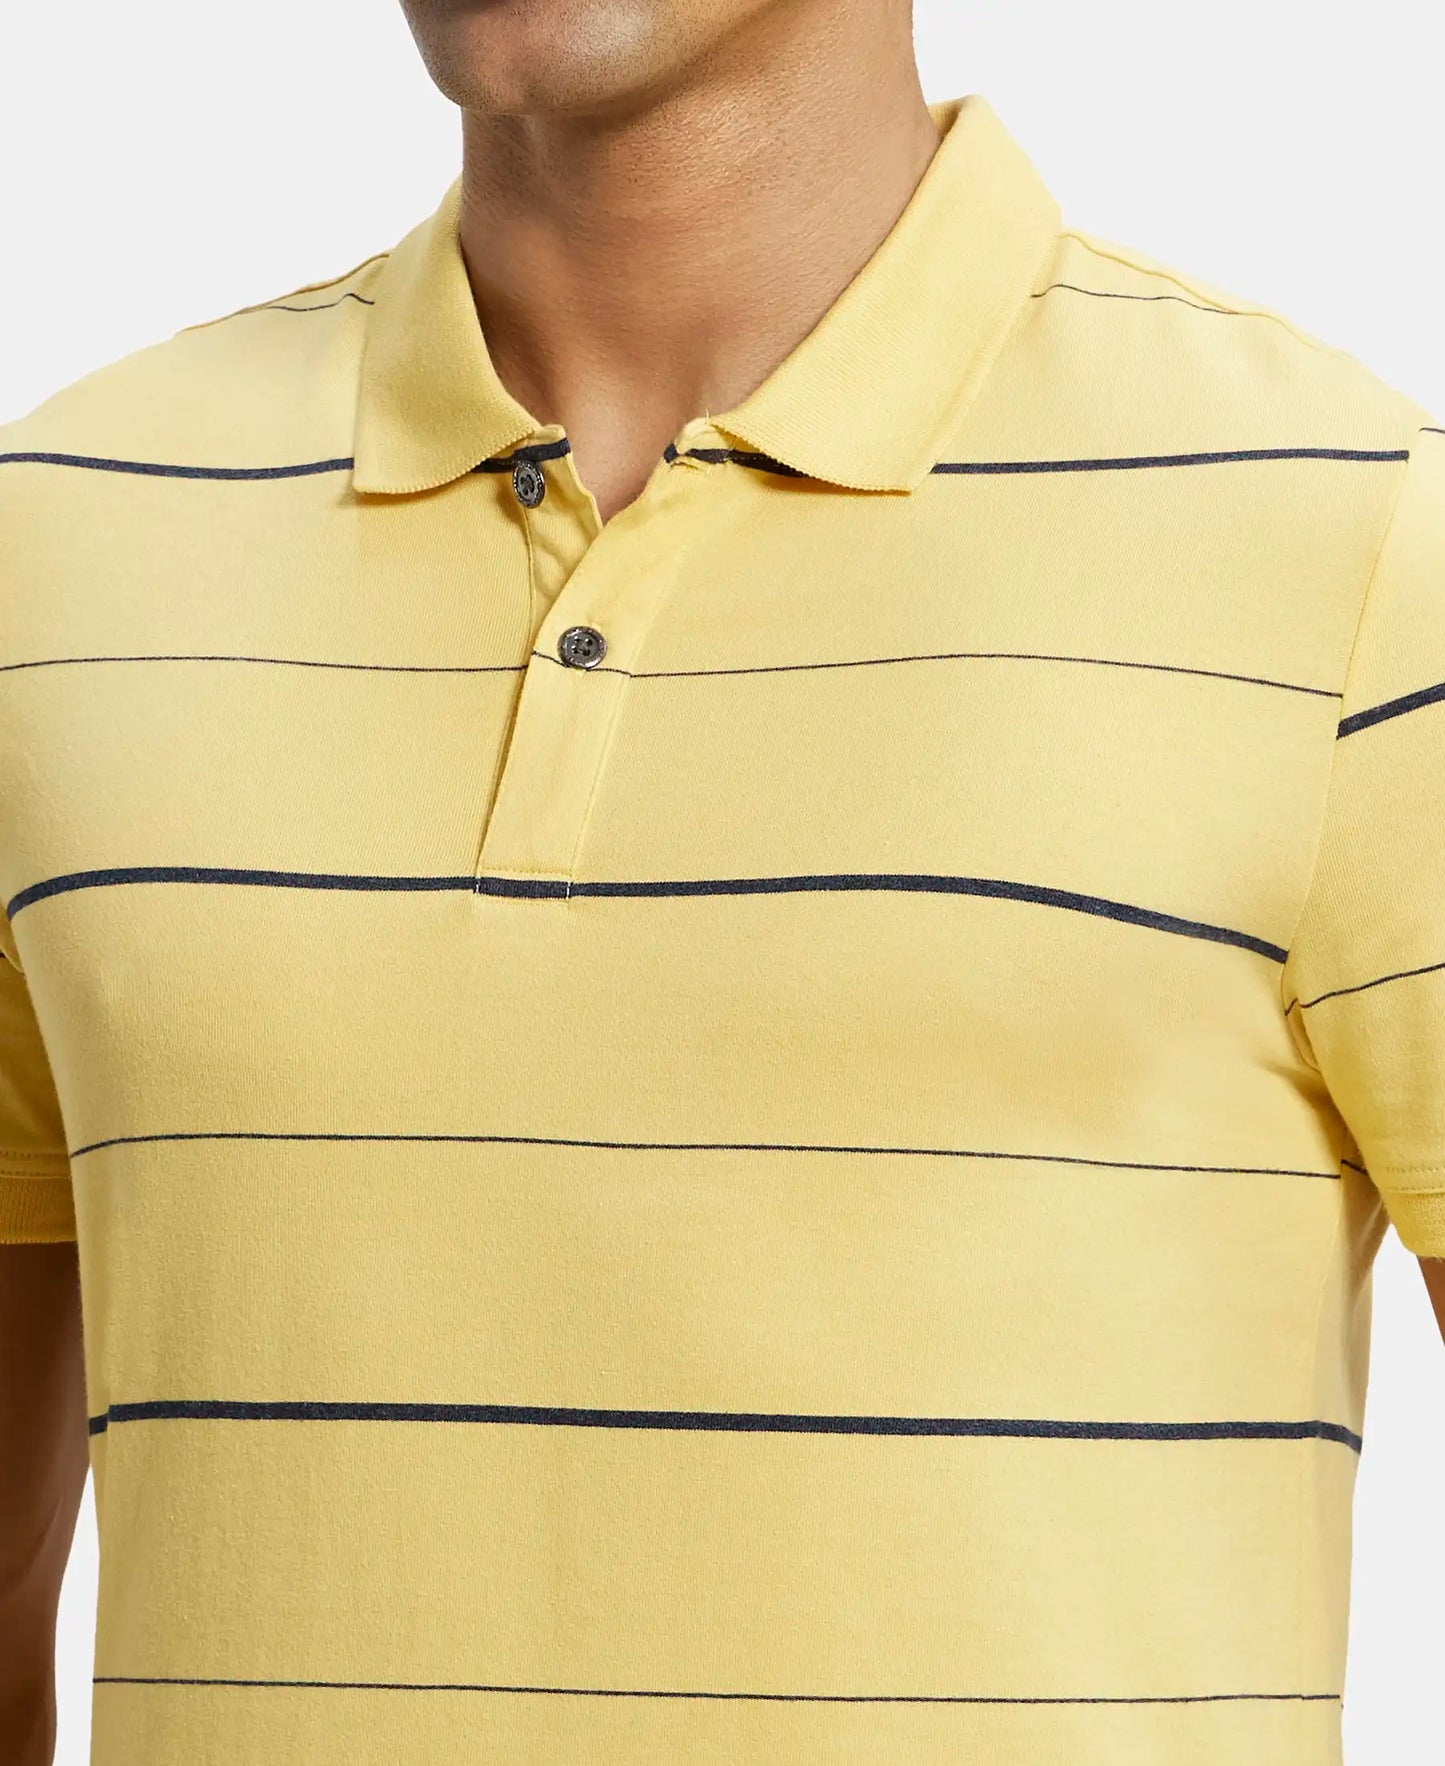 Super Combed Cotton Rich Striped Half Sleeve Polo T-Shirt - Corn silk & Night Sky ground-6